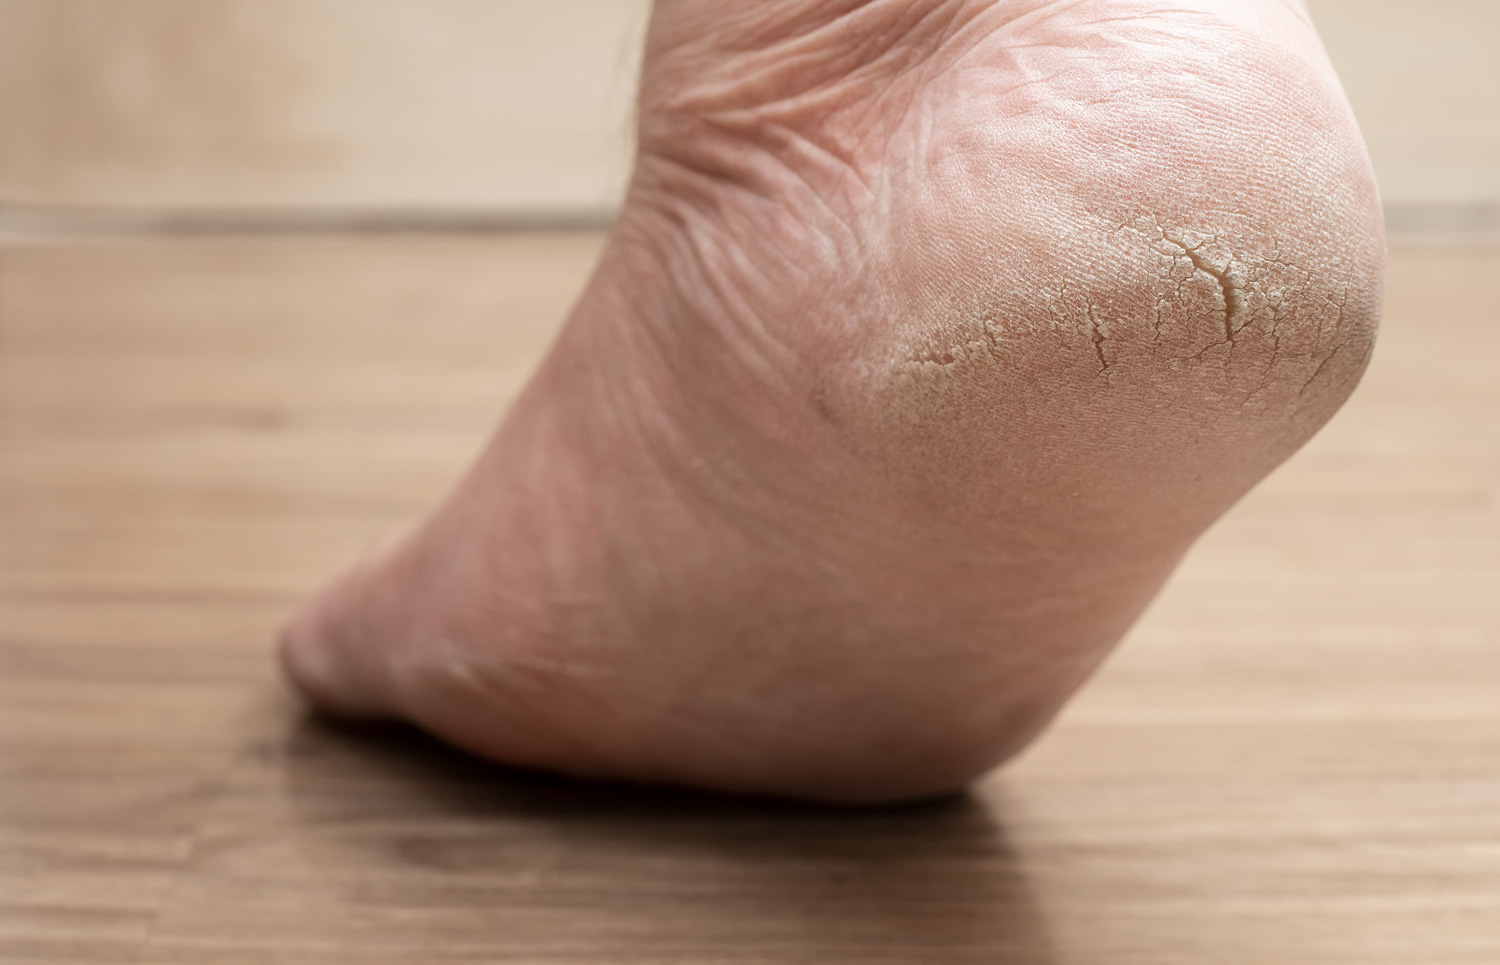 Cracked Skin Peeling Foot Crack Heel Crack Peeling Removal Dead Skin Salon  Step | eBay